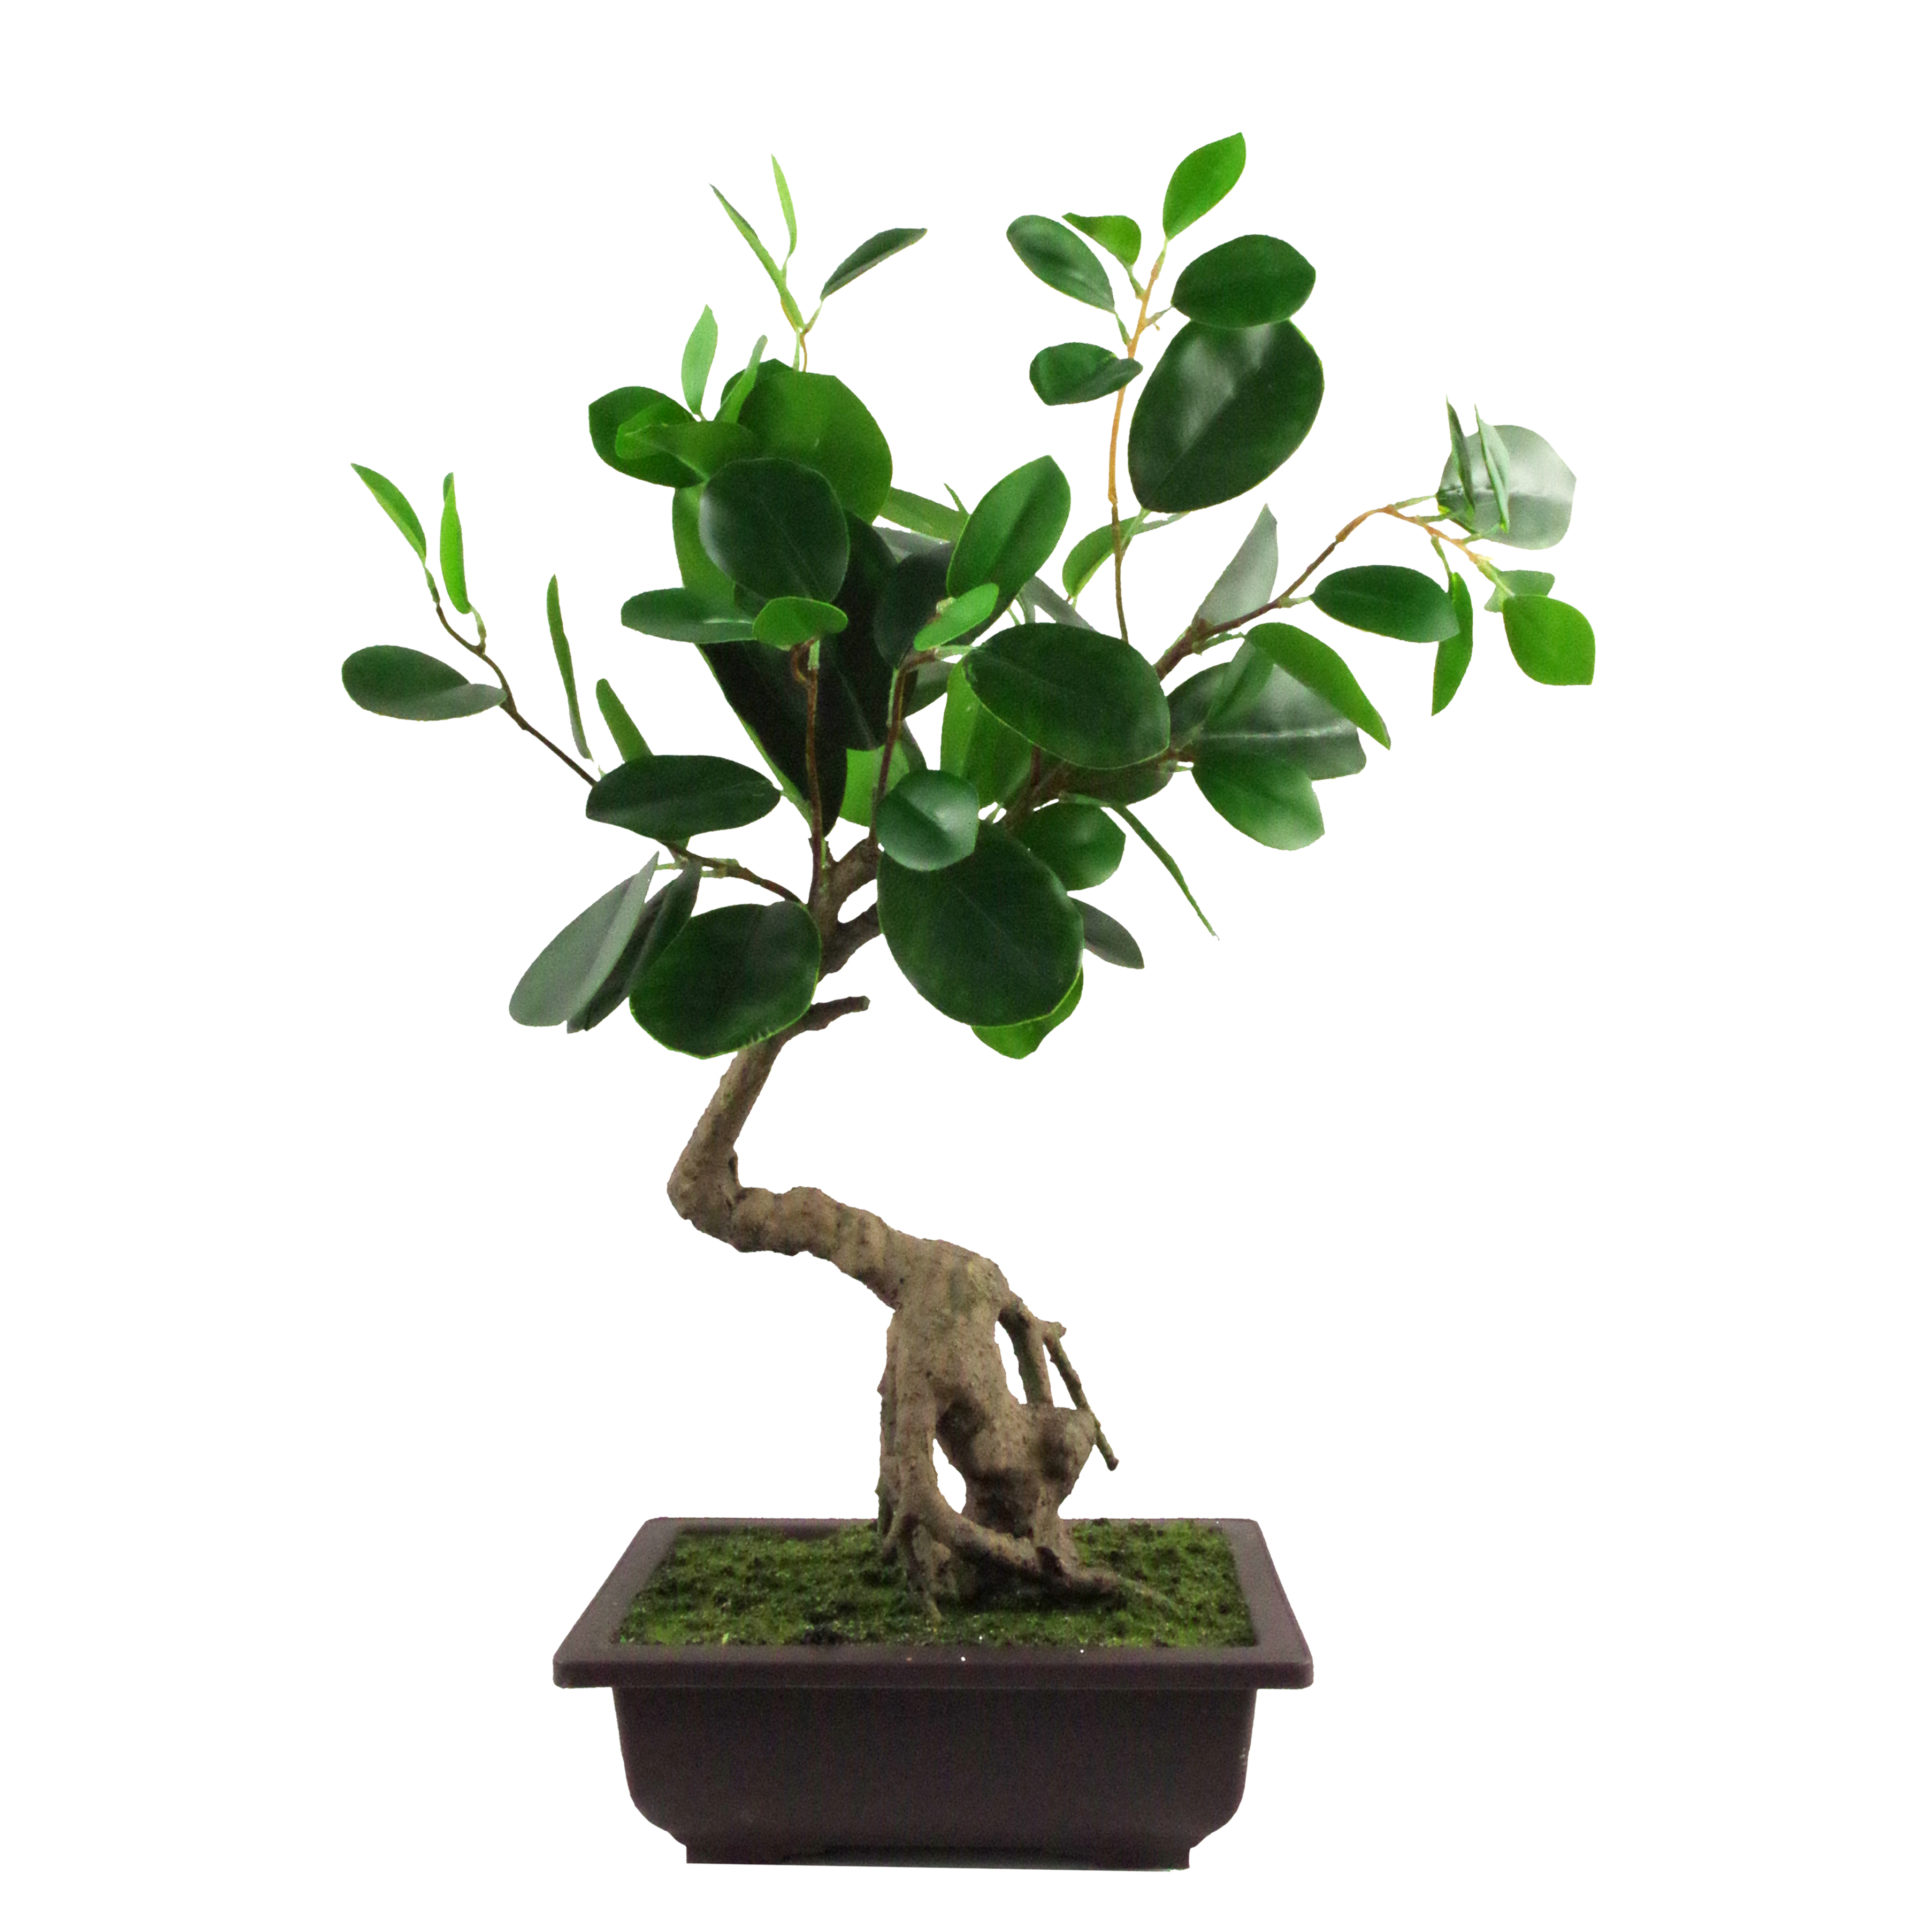 Artificial Bonsai Plants Wholesale From Manufacturer